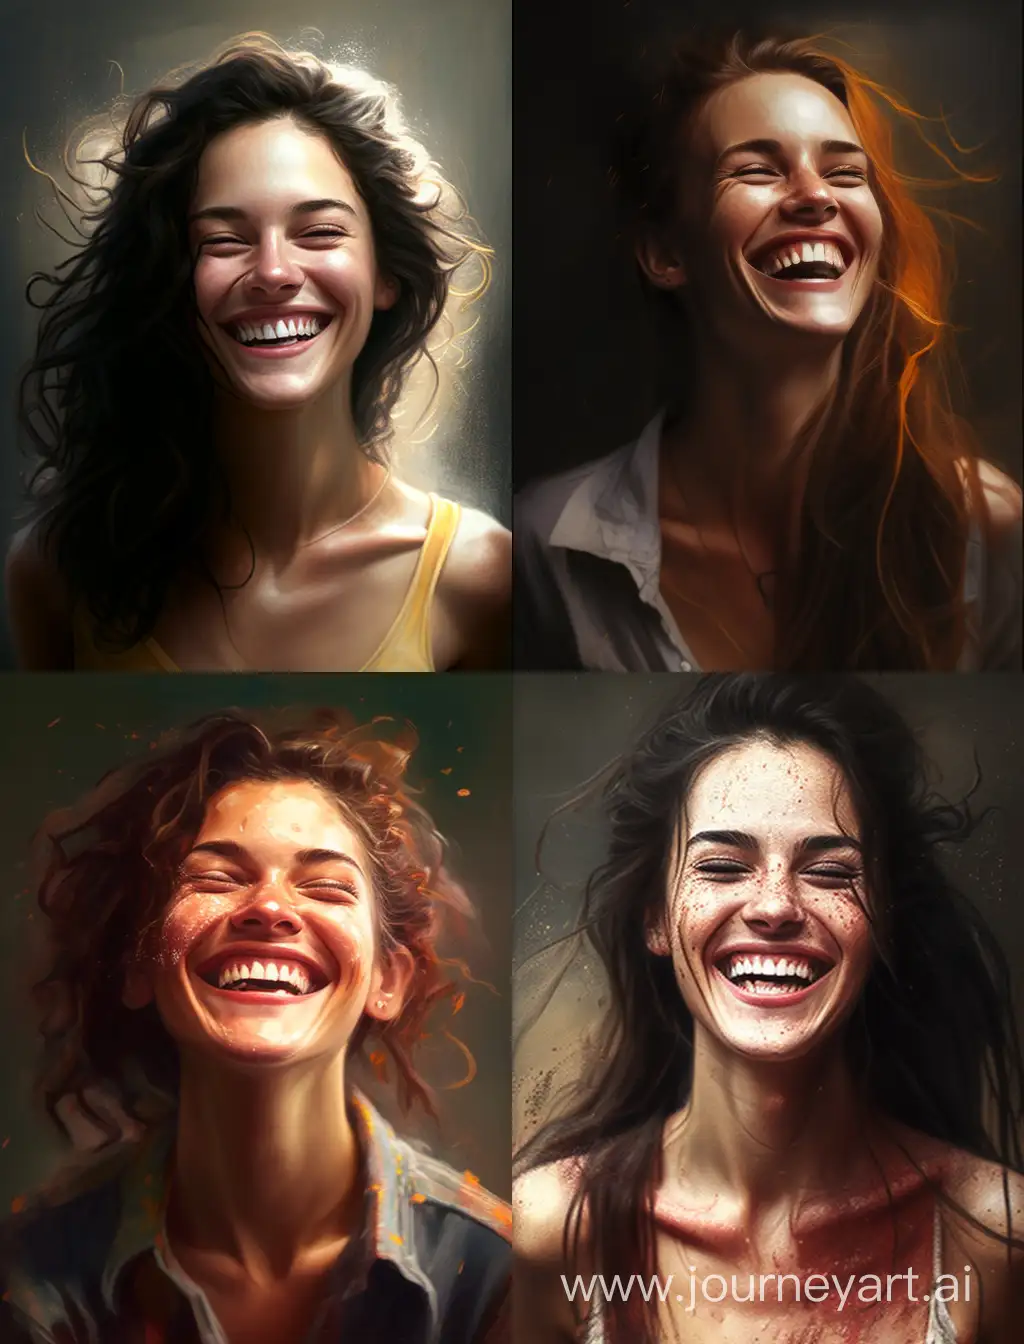 Joyful-Woman-with-Vibrant-Smile-and-Radiant-Energy